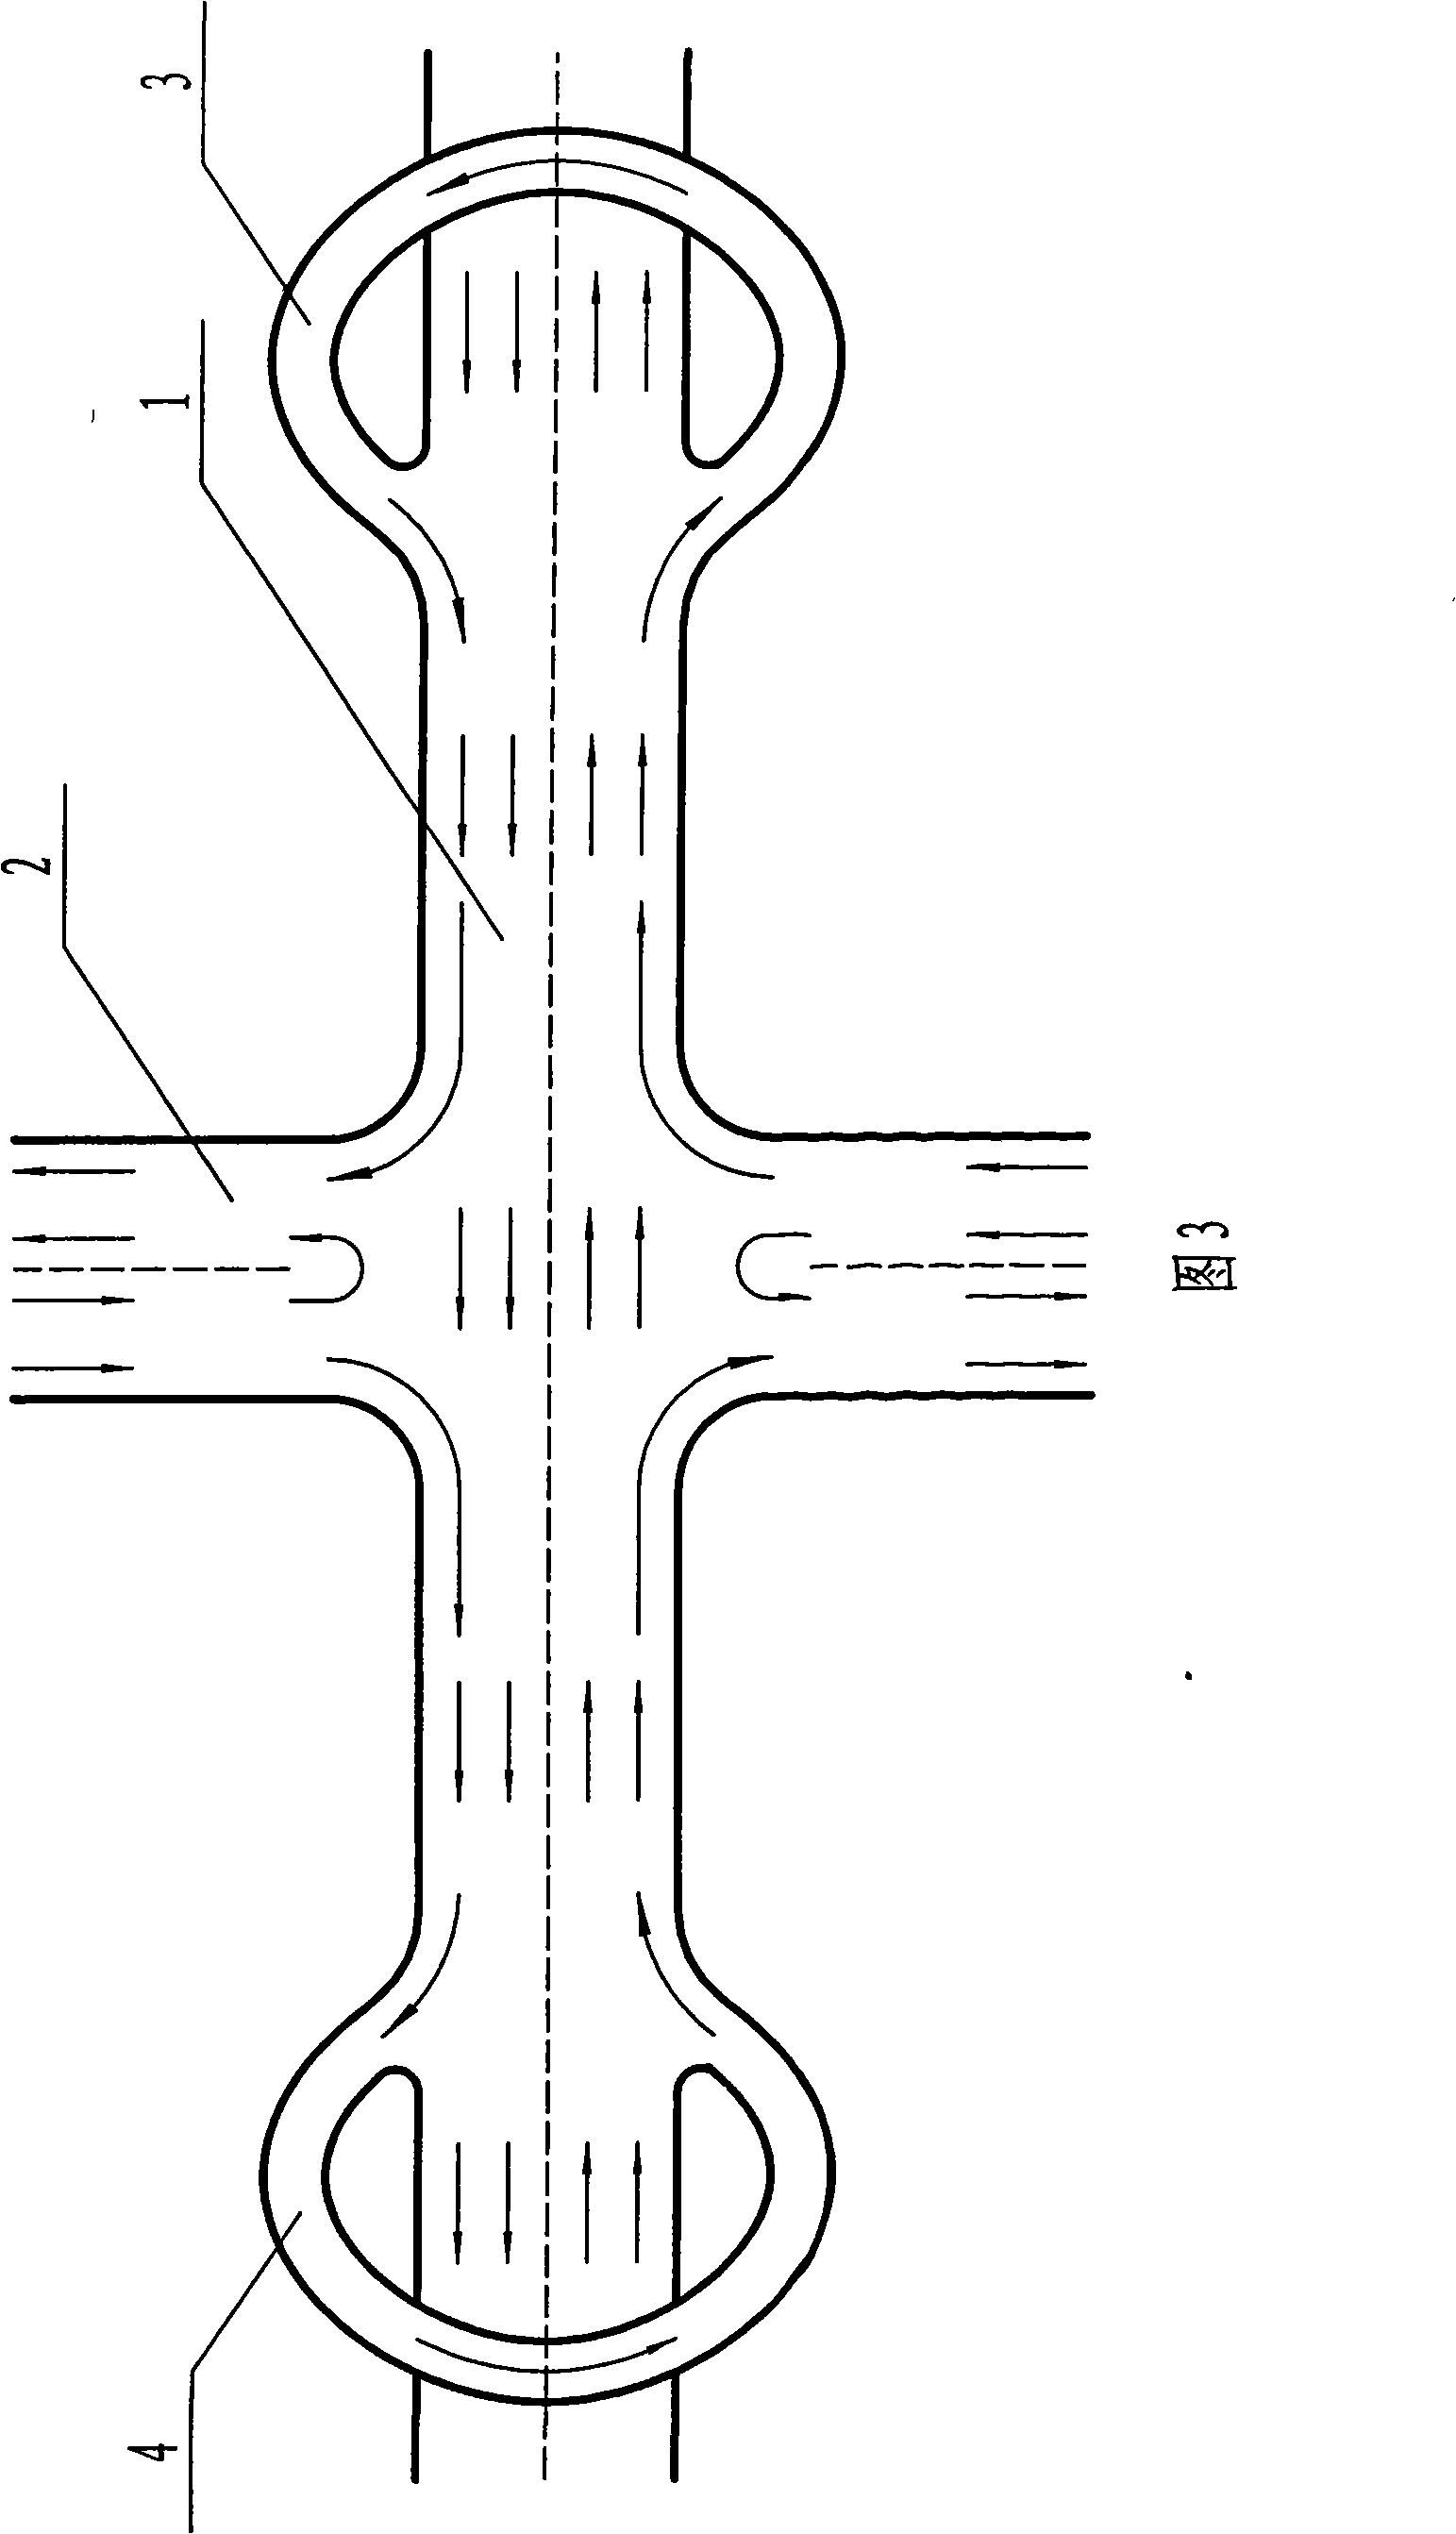 City intersection passing bridge or passage